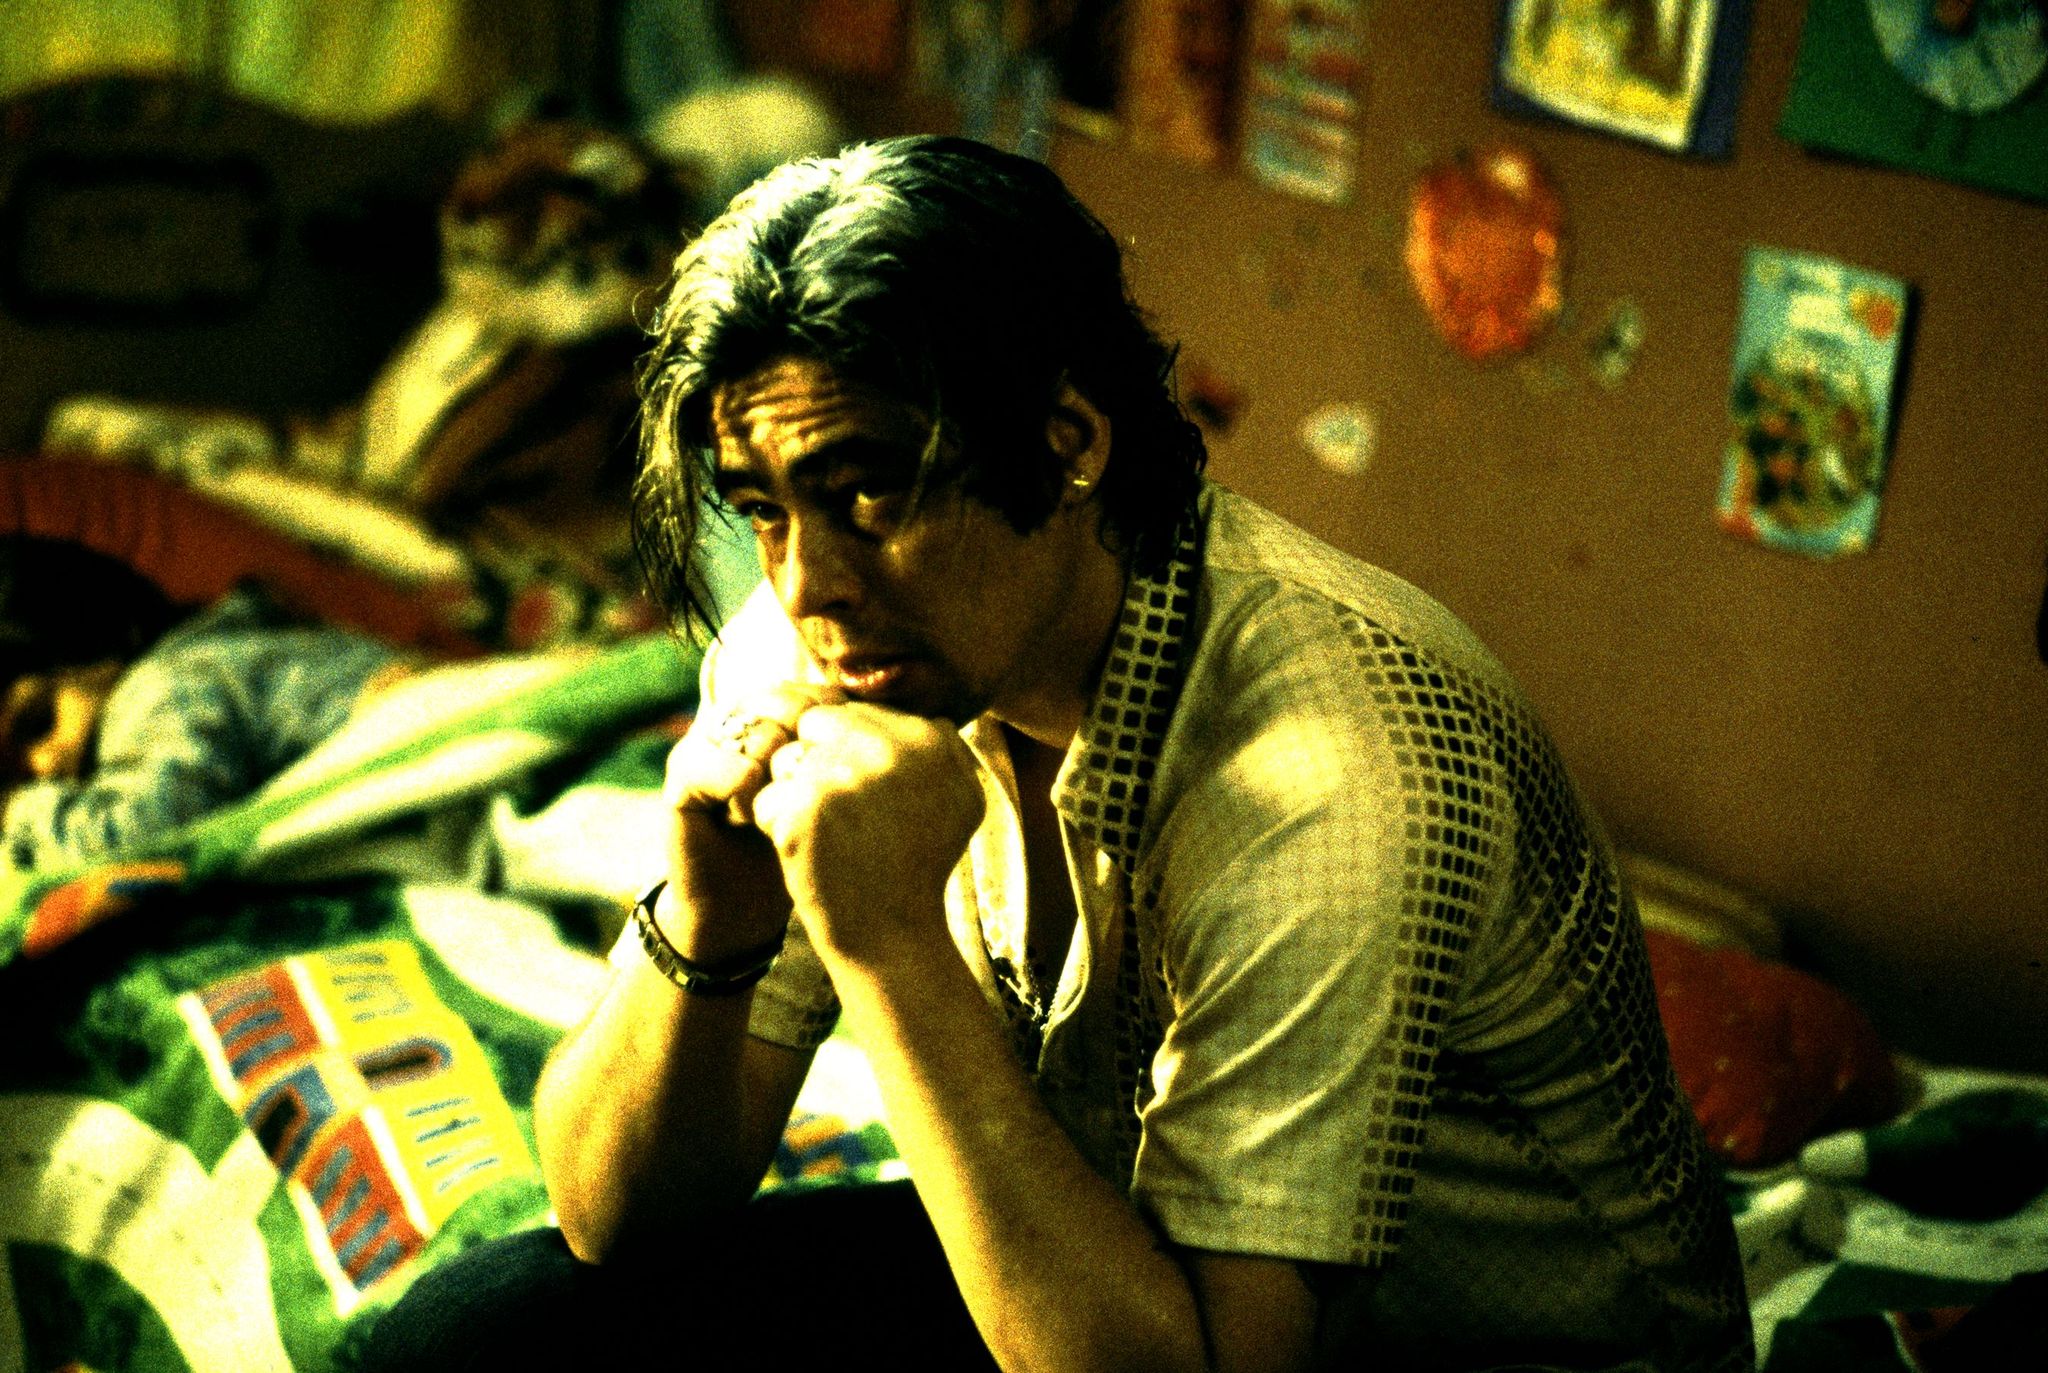 Still of Benicio Del Toro in 21 gramas (2003)